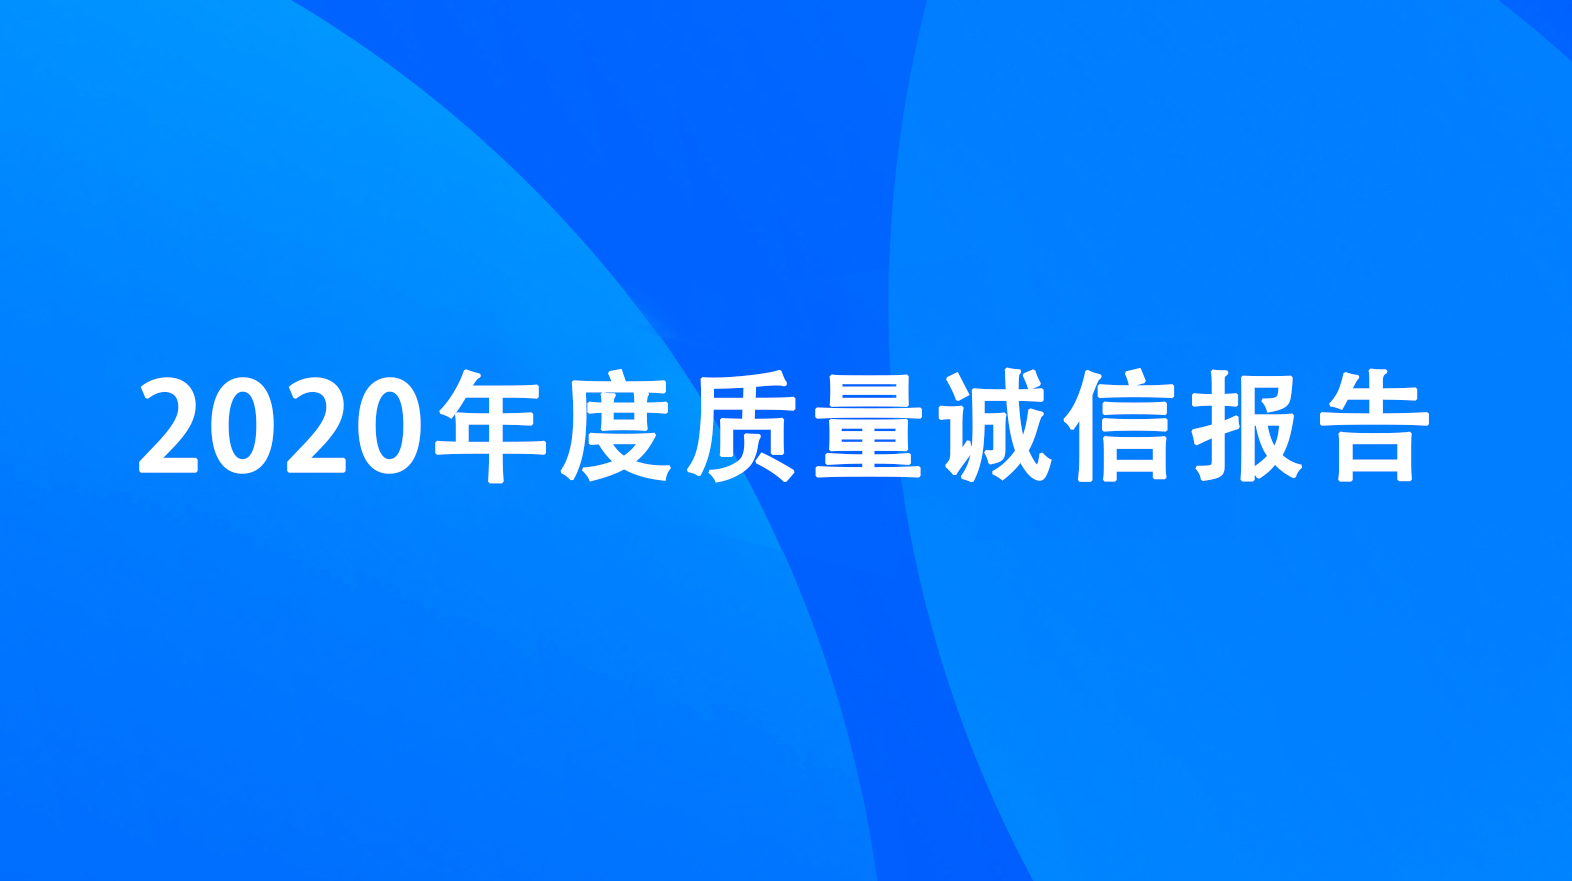 2020 Quality Integrity Report of Hangzhou Shengda Electronics Co., Ltd